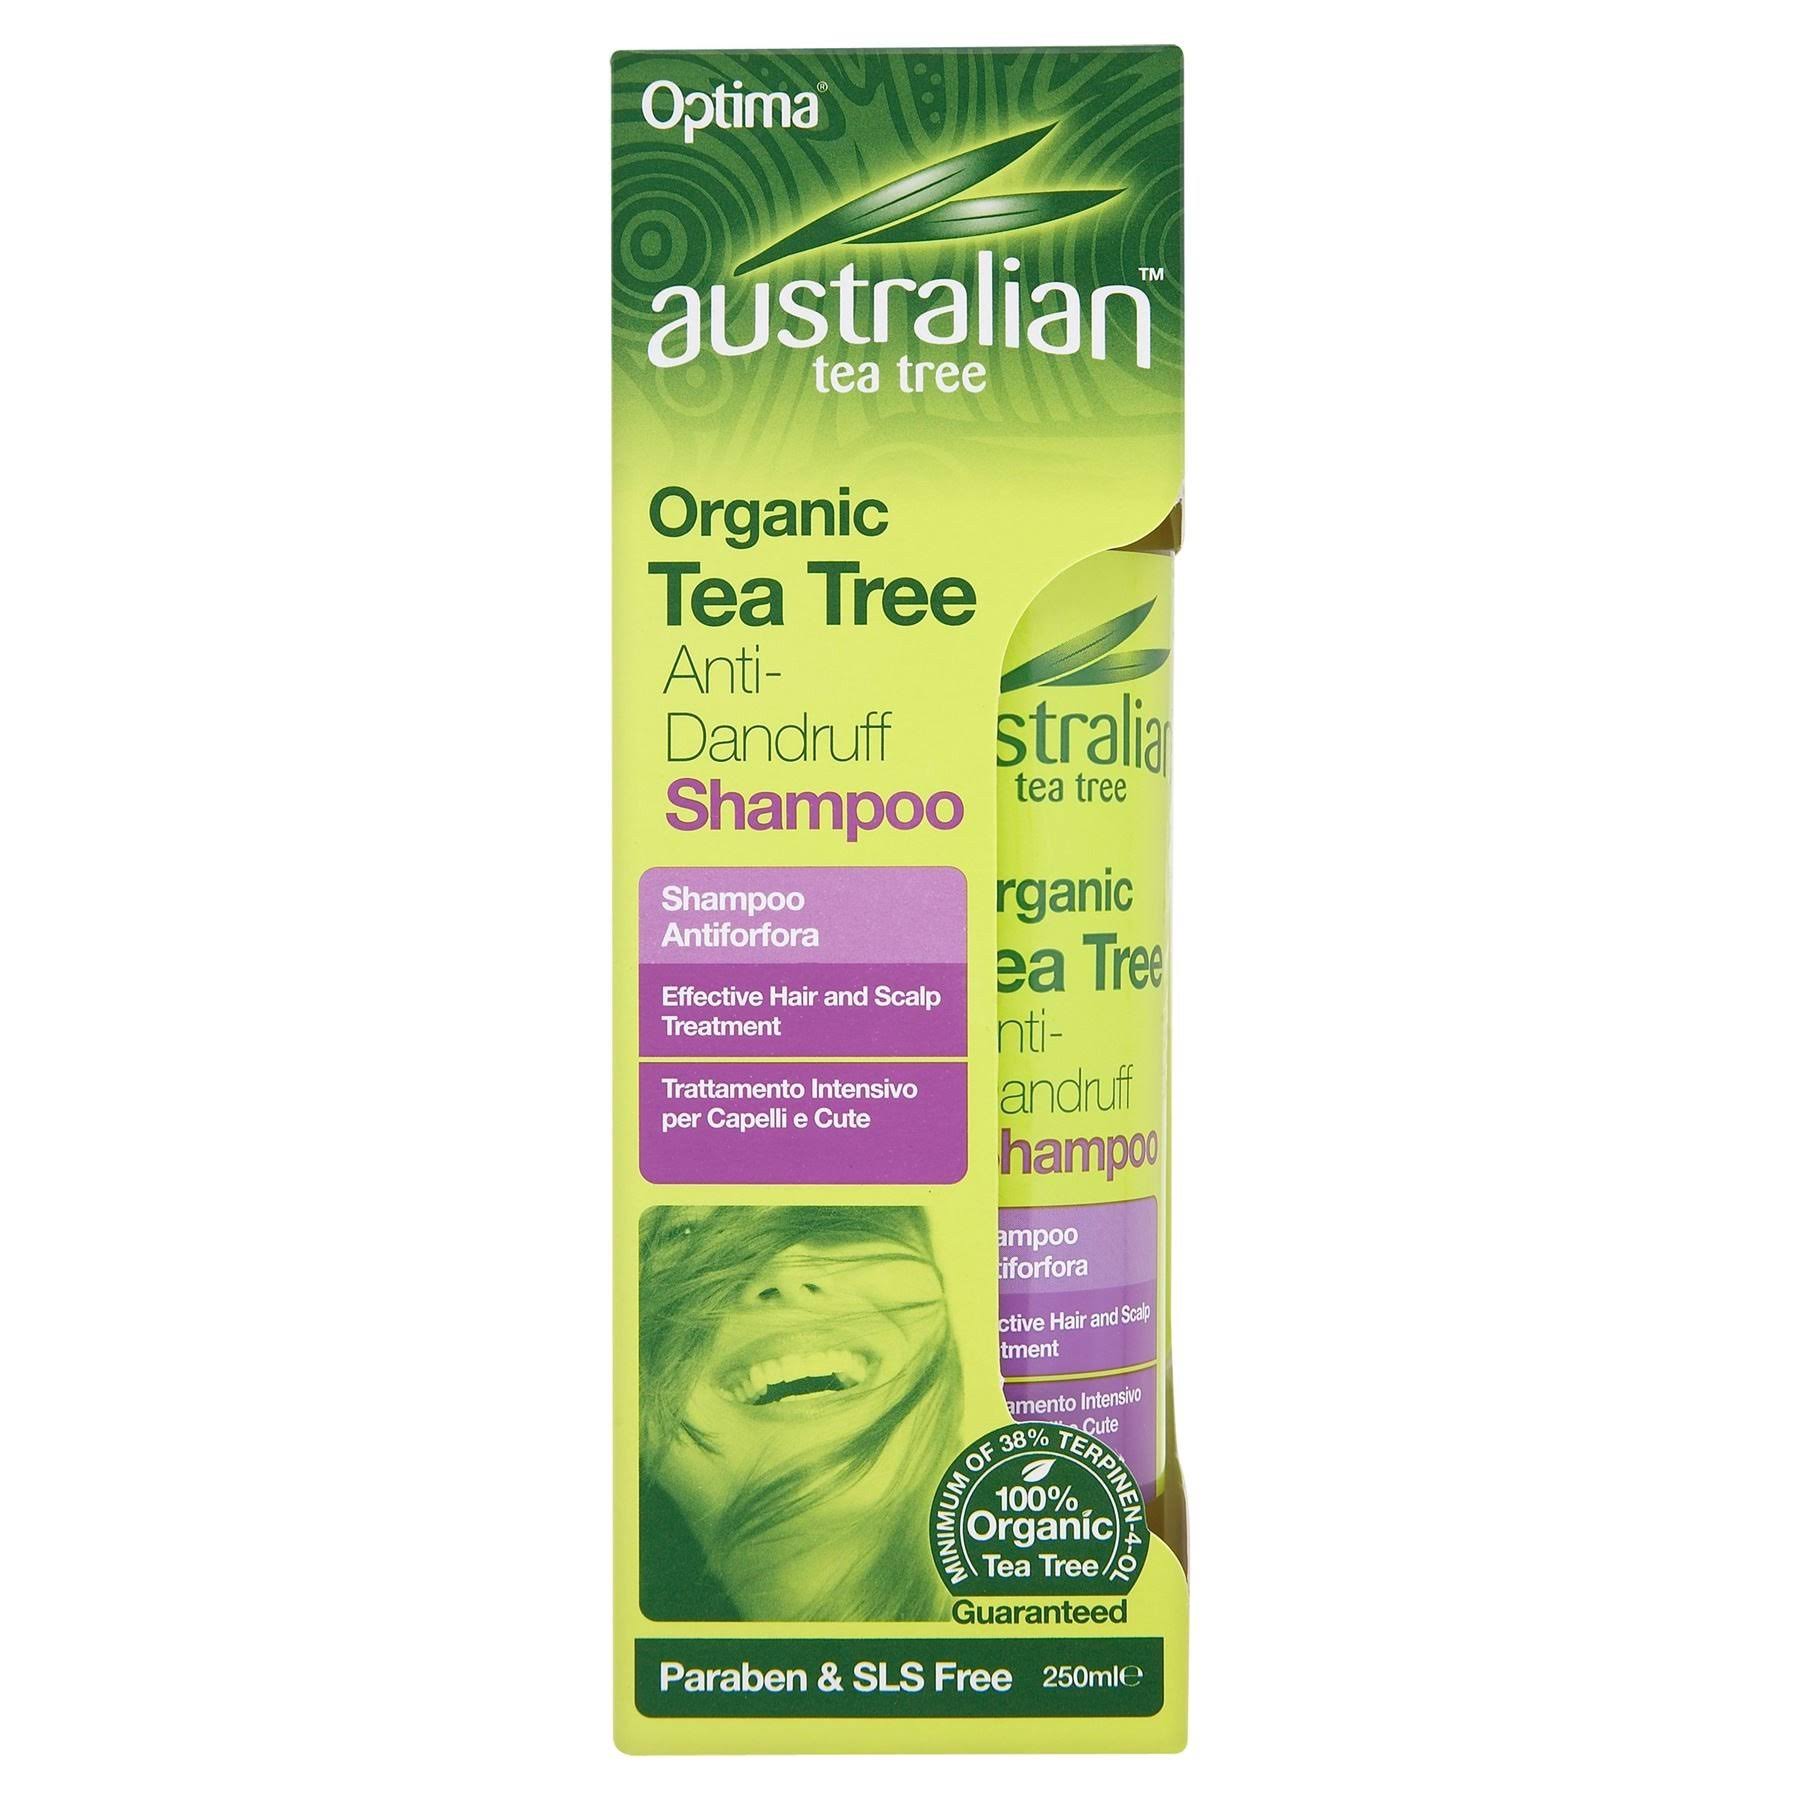 Optima Australian Anti-Dandruff Shampoo - Tea Tree, 250ml